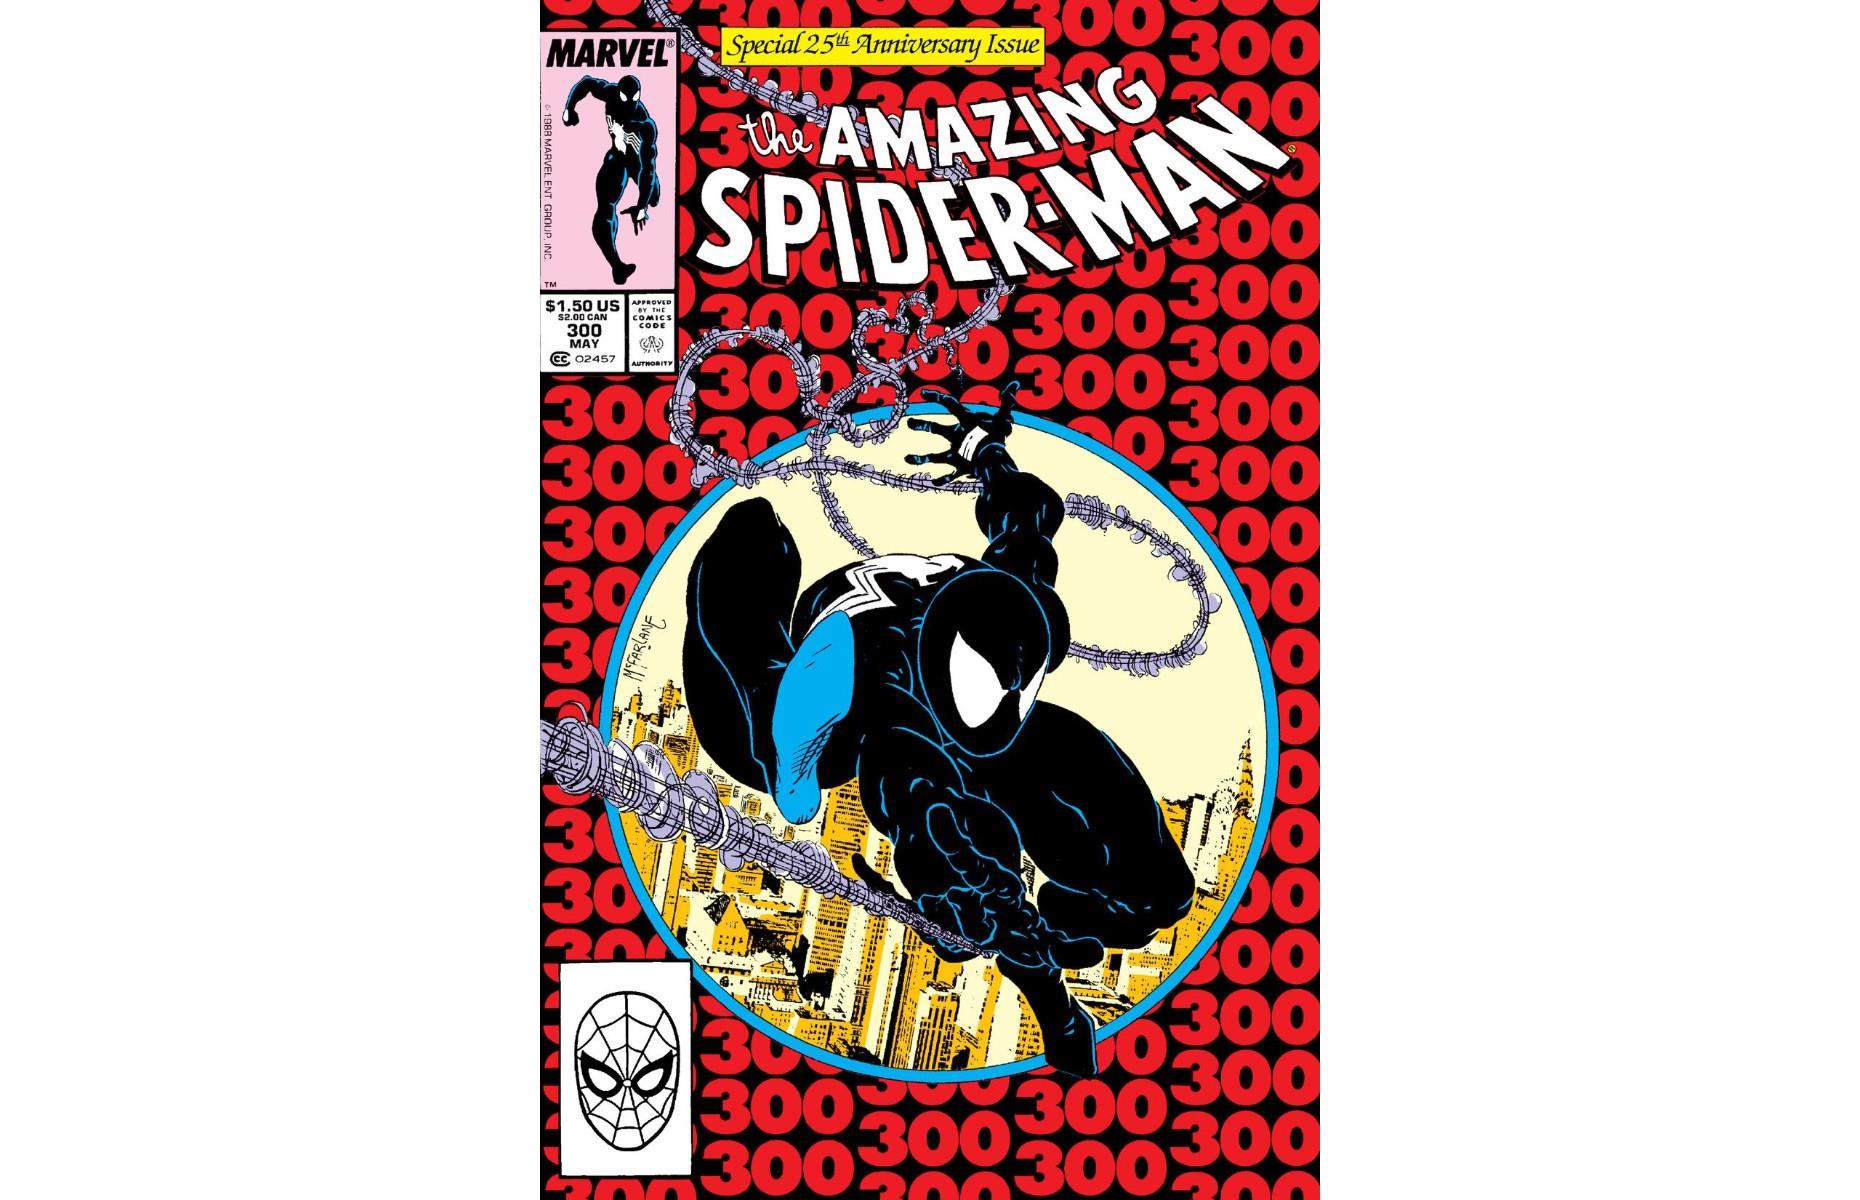 Amazing Spider-Man #300: up to £1,500 ($2,000)